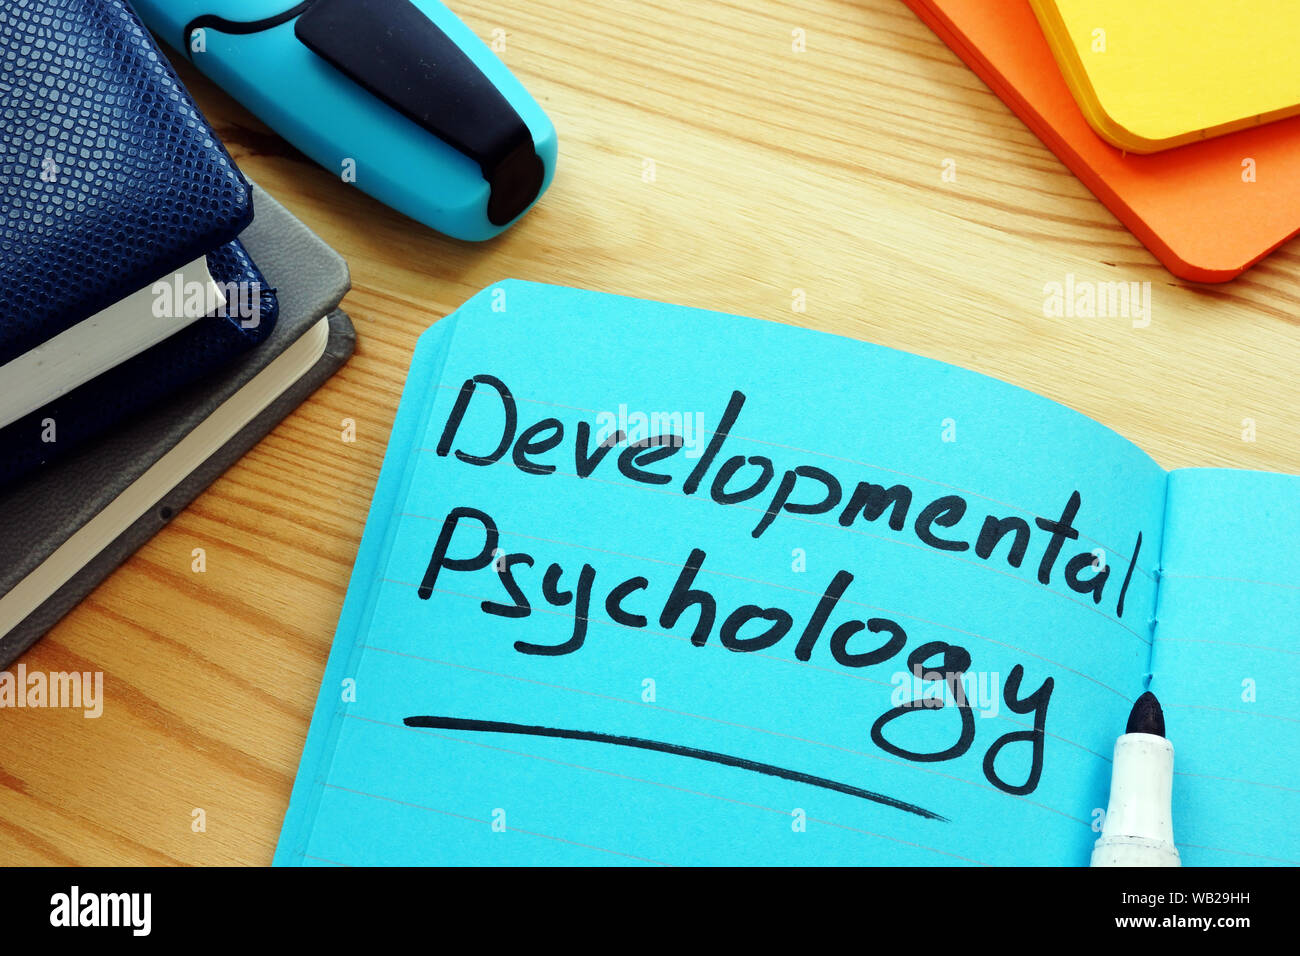 Developmental psychology sign on the blue page. Stock Photo